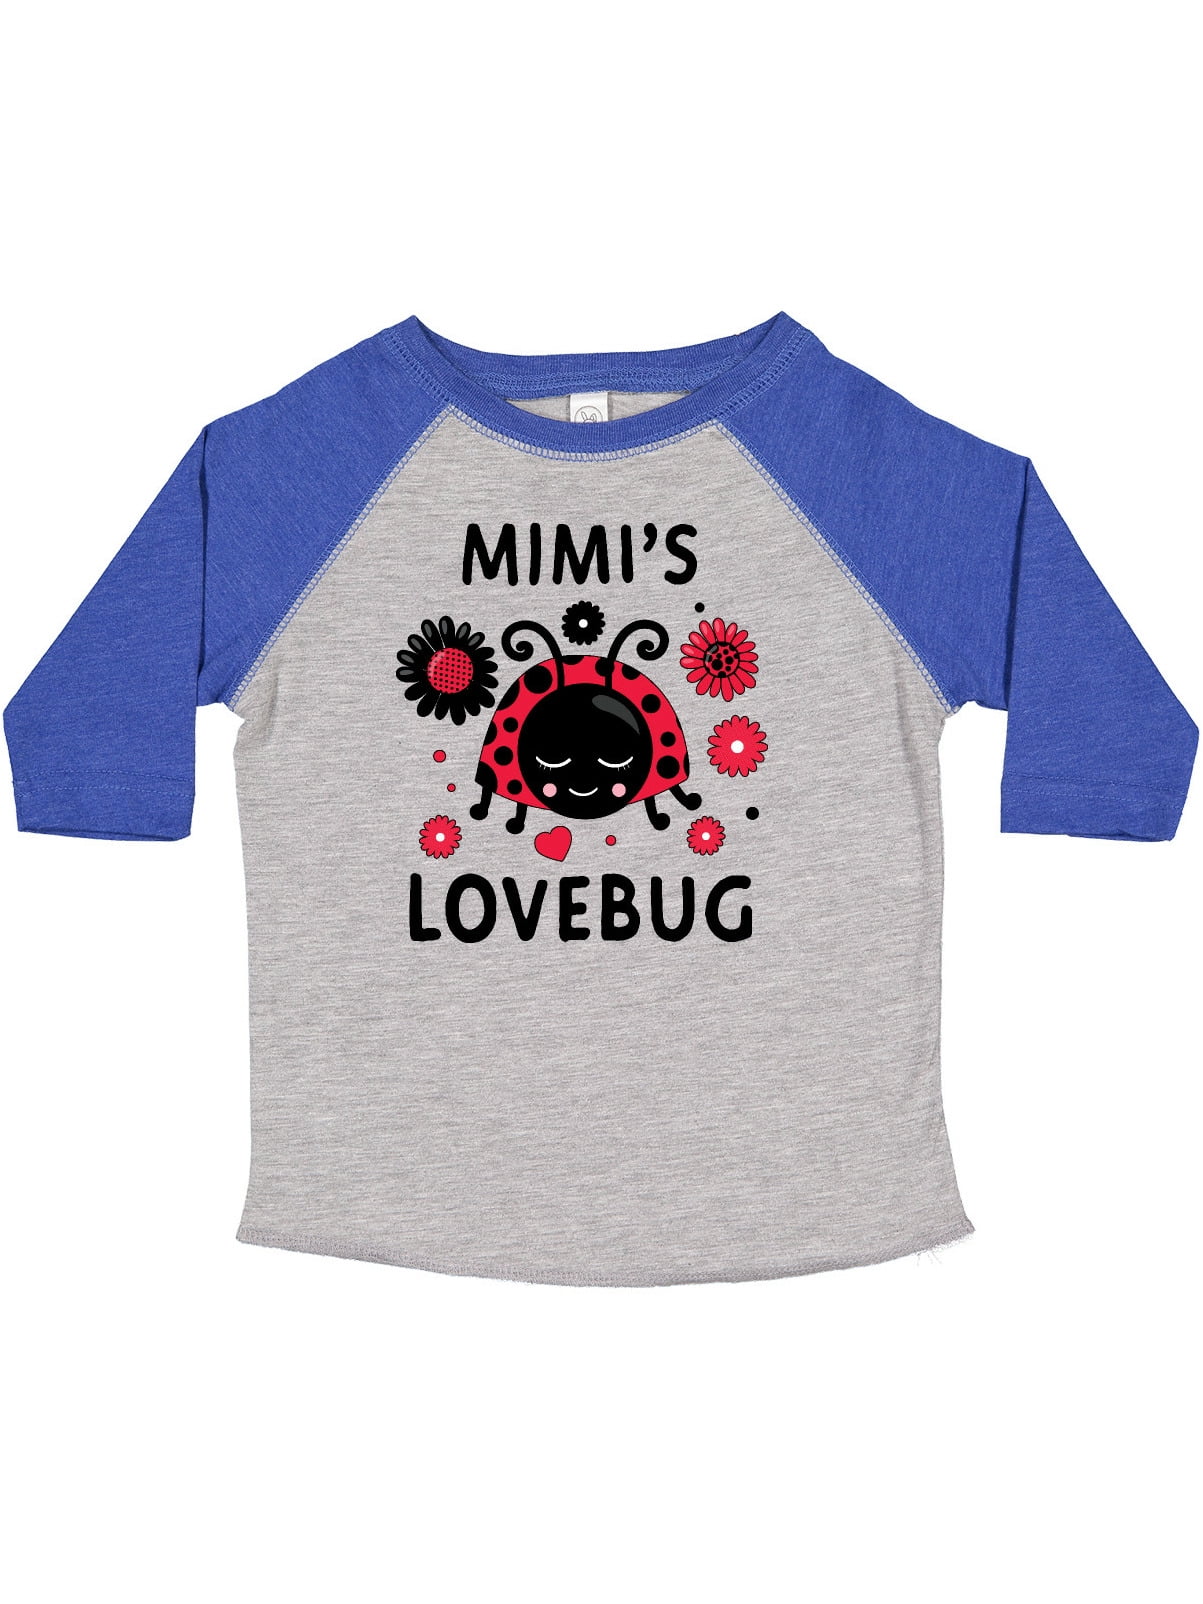 Mimi Granddaughter Mimi Life Mimi Pregnancy Announcement Mimi and Me 2 Mimi and Me Mimi Baby Shirts Mimi Gift Wild About Shirt